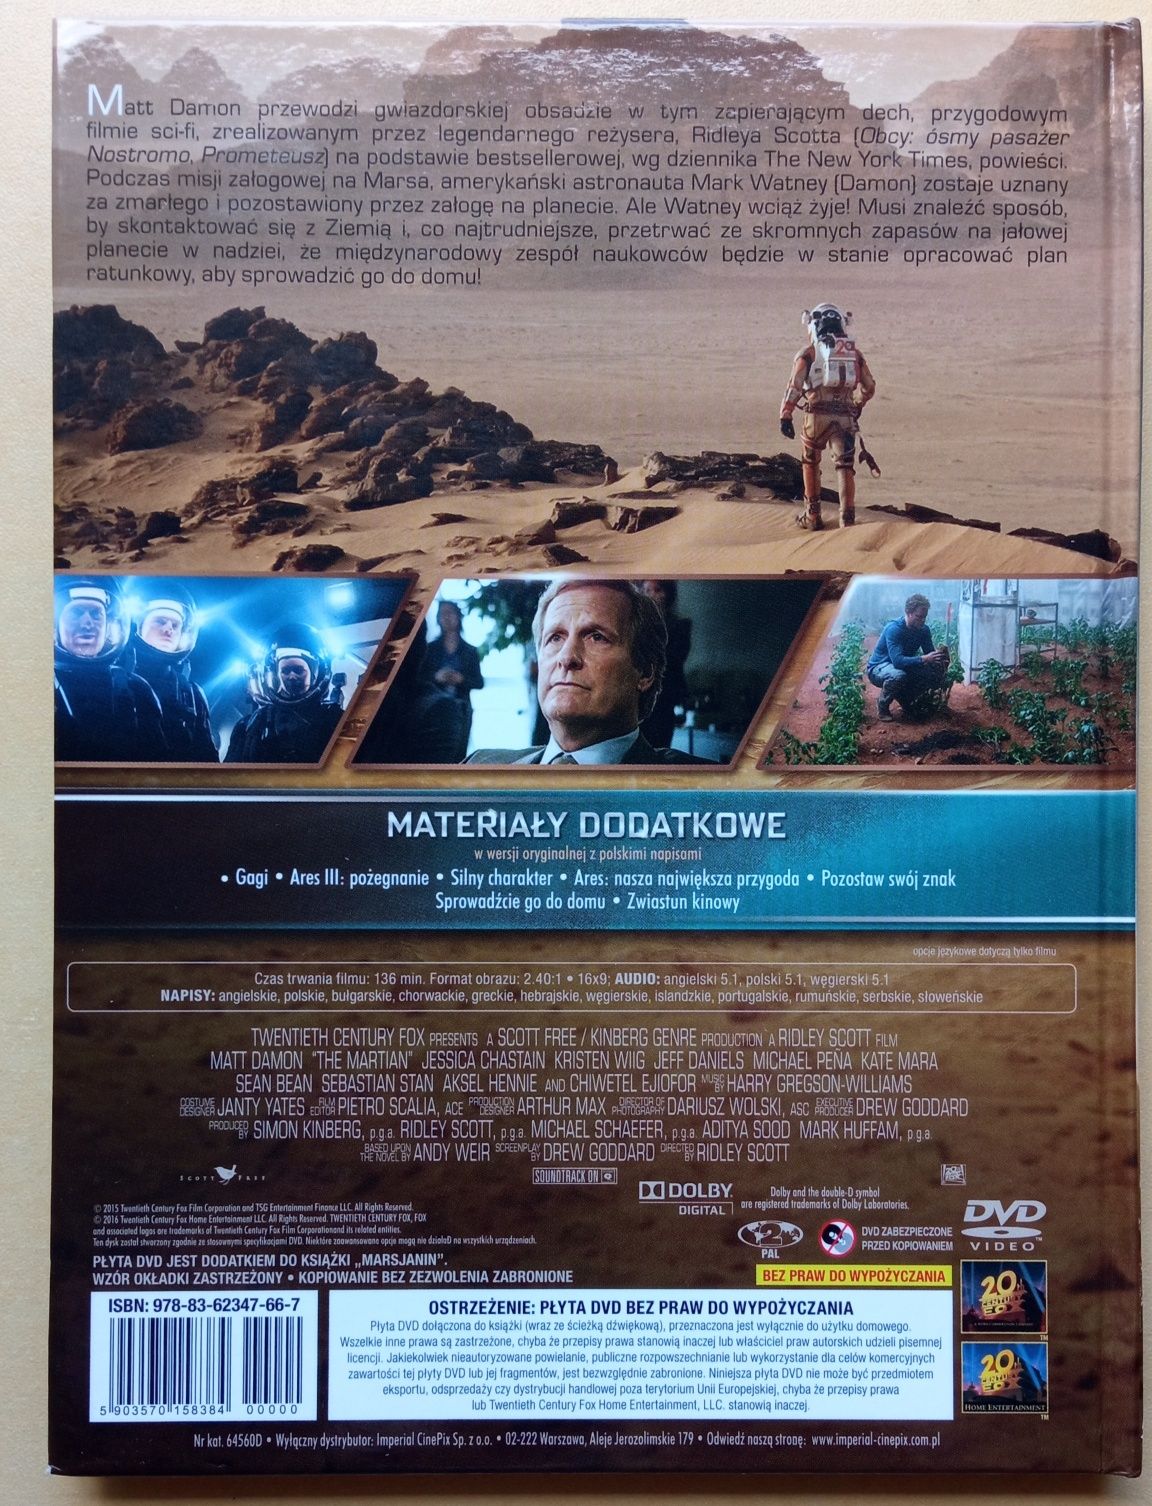 Film dvd Marsjanin the Martian matt Damon Ridley scott